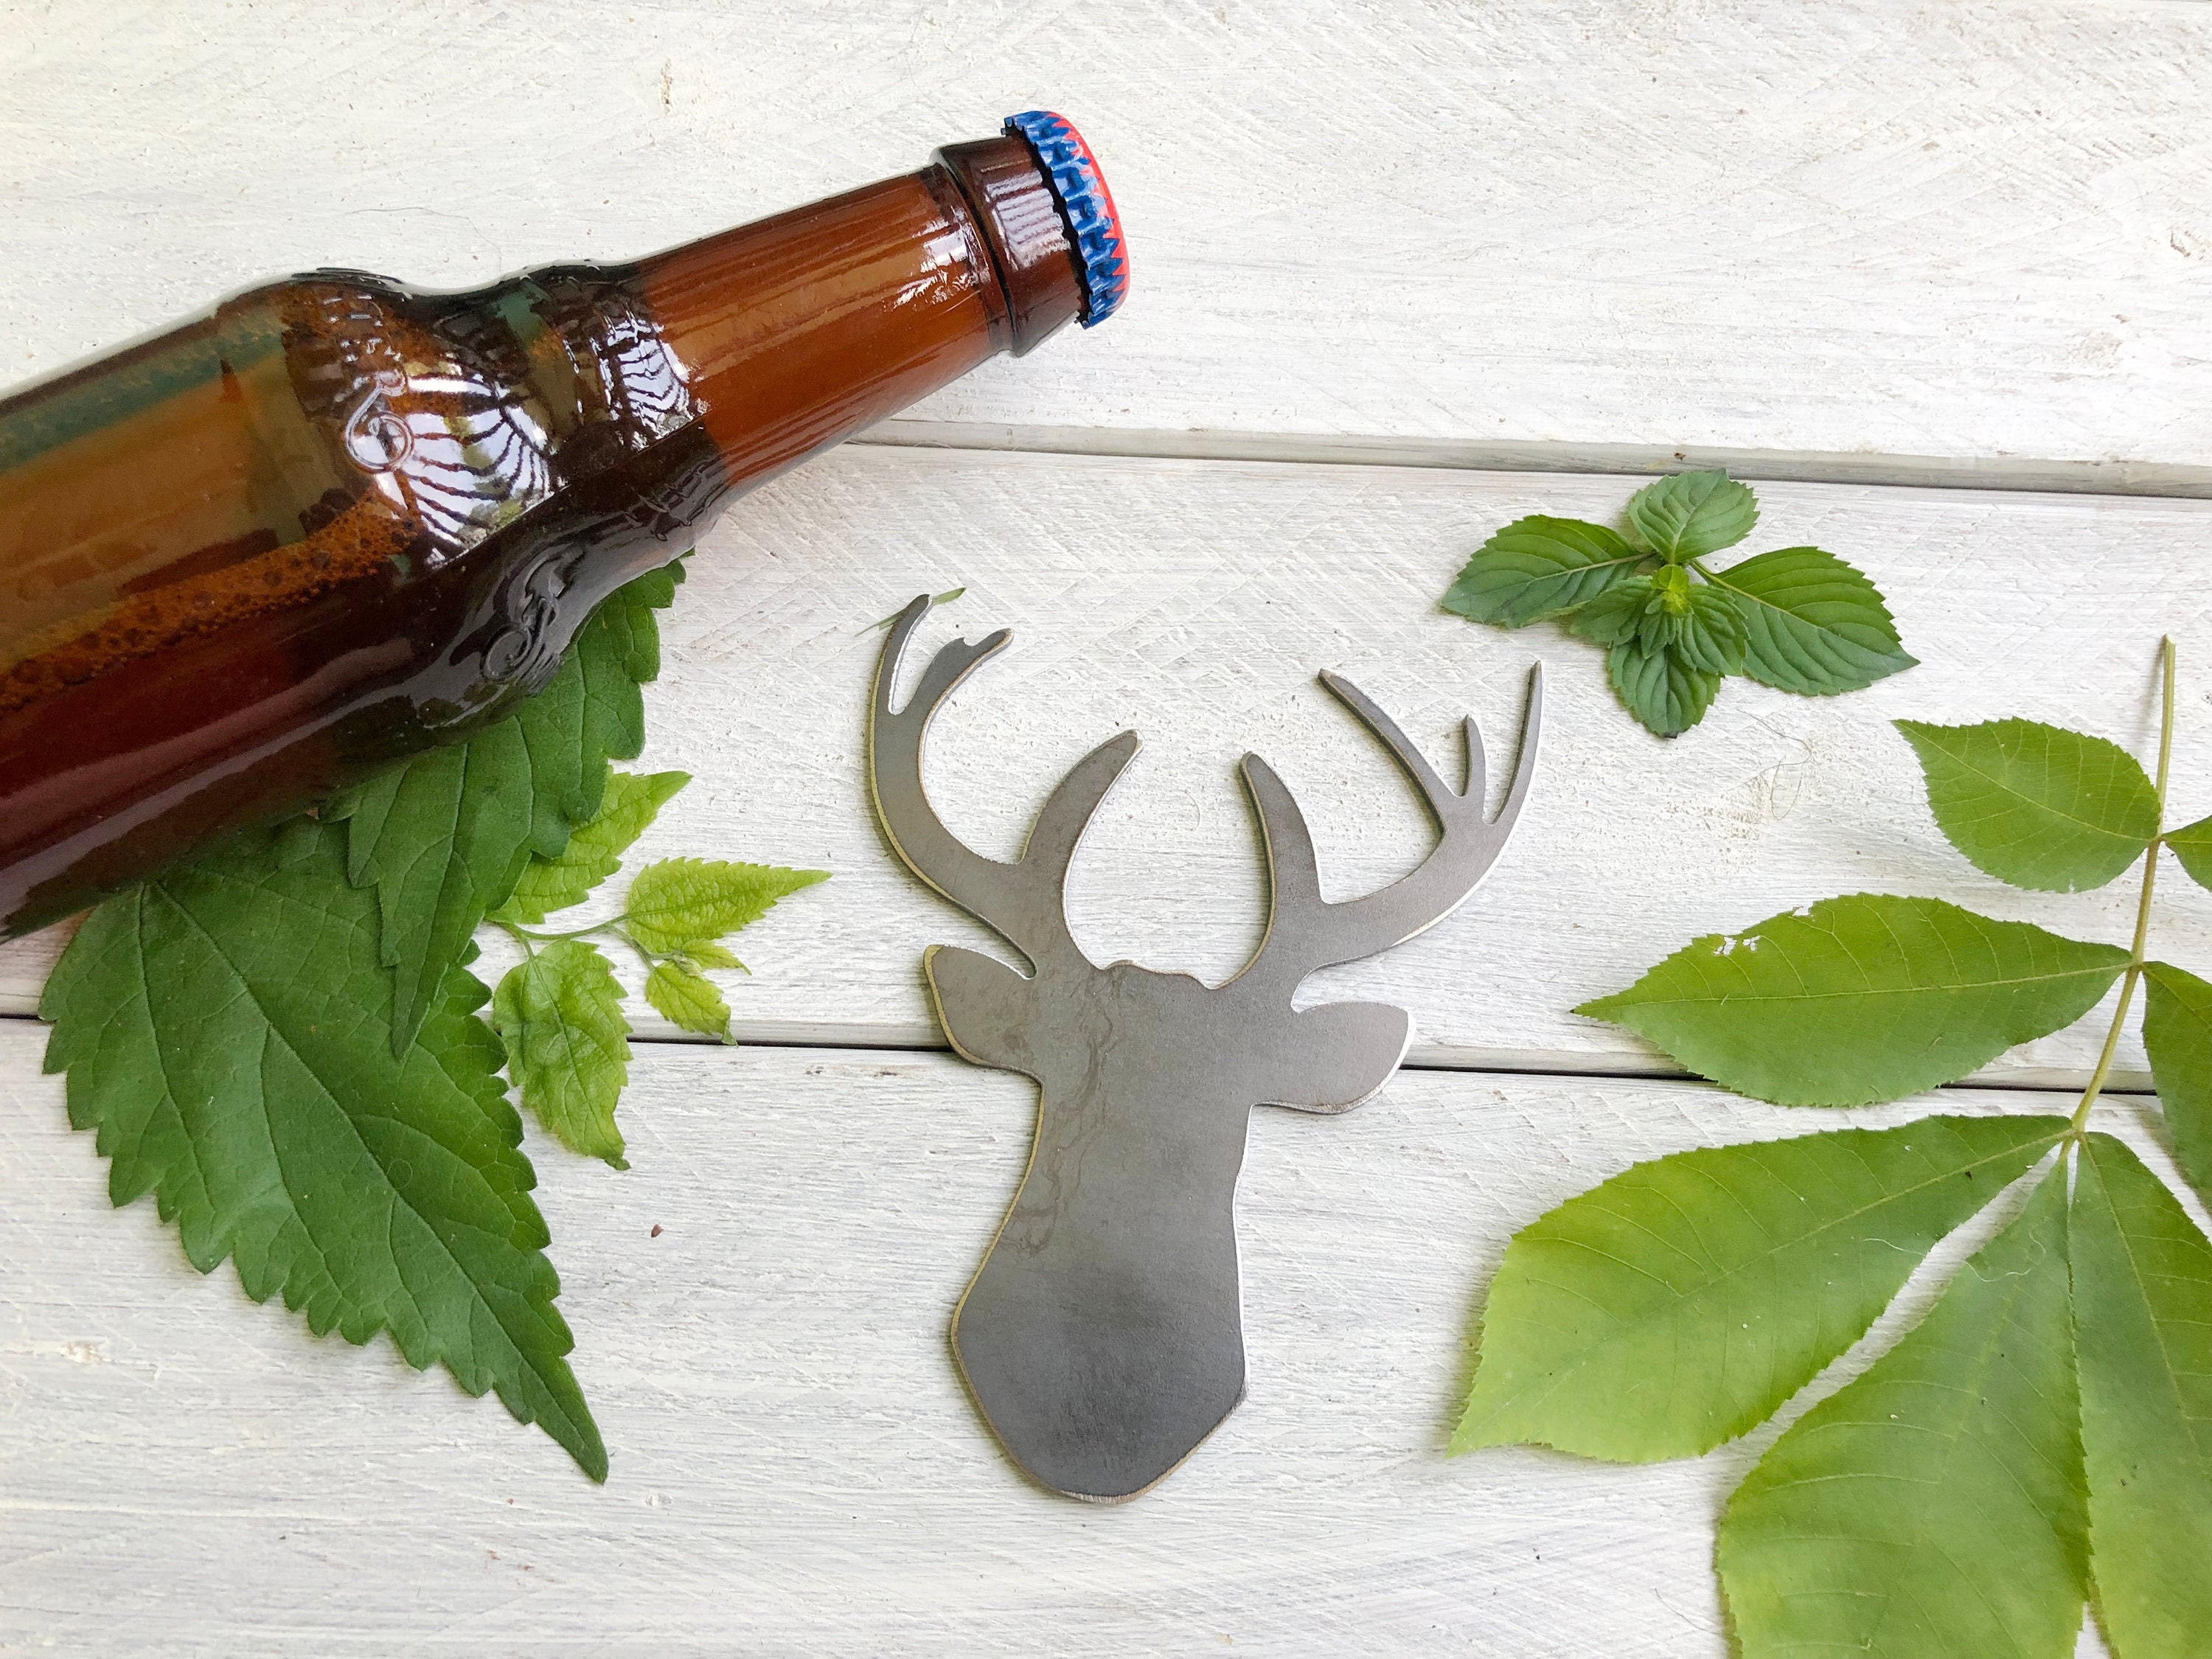 HIBRO Wireless Can Opener Bottles Opener Deer Head Shaped Opener Novelty  Beverage Opener Bar Kitchen Tool Gift For Wedding Christmas Birthday 